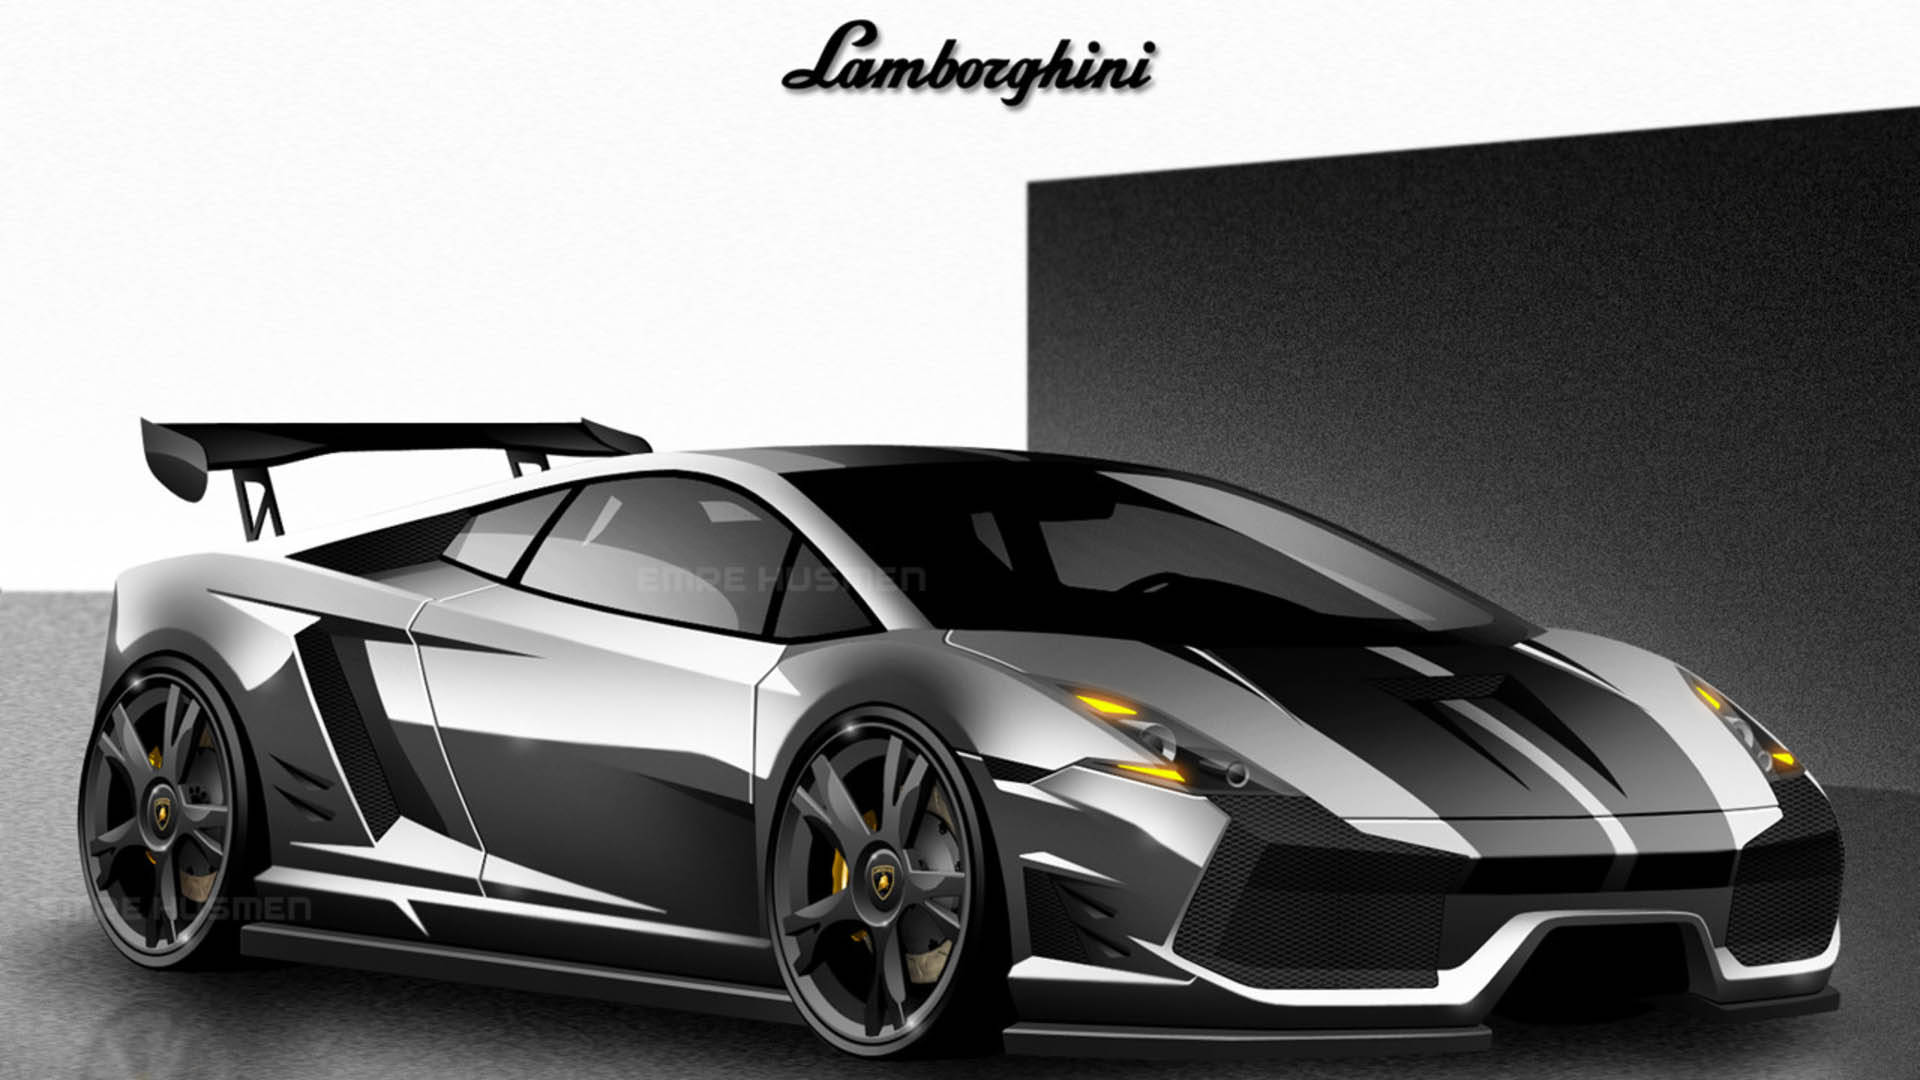 Lamborghini 1920X1080 Wallpaper and Background Image